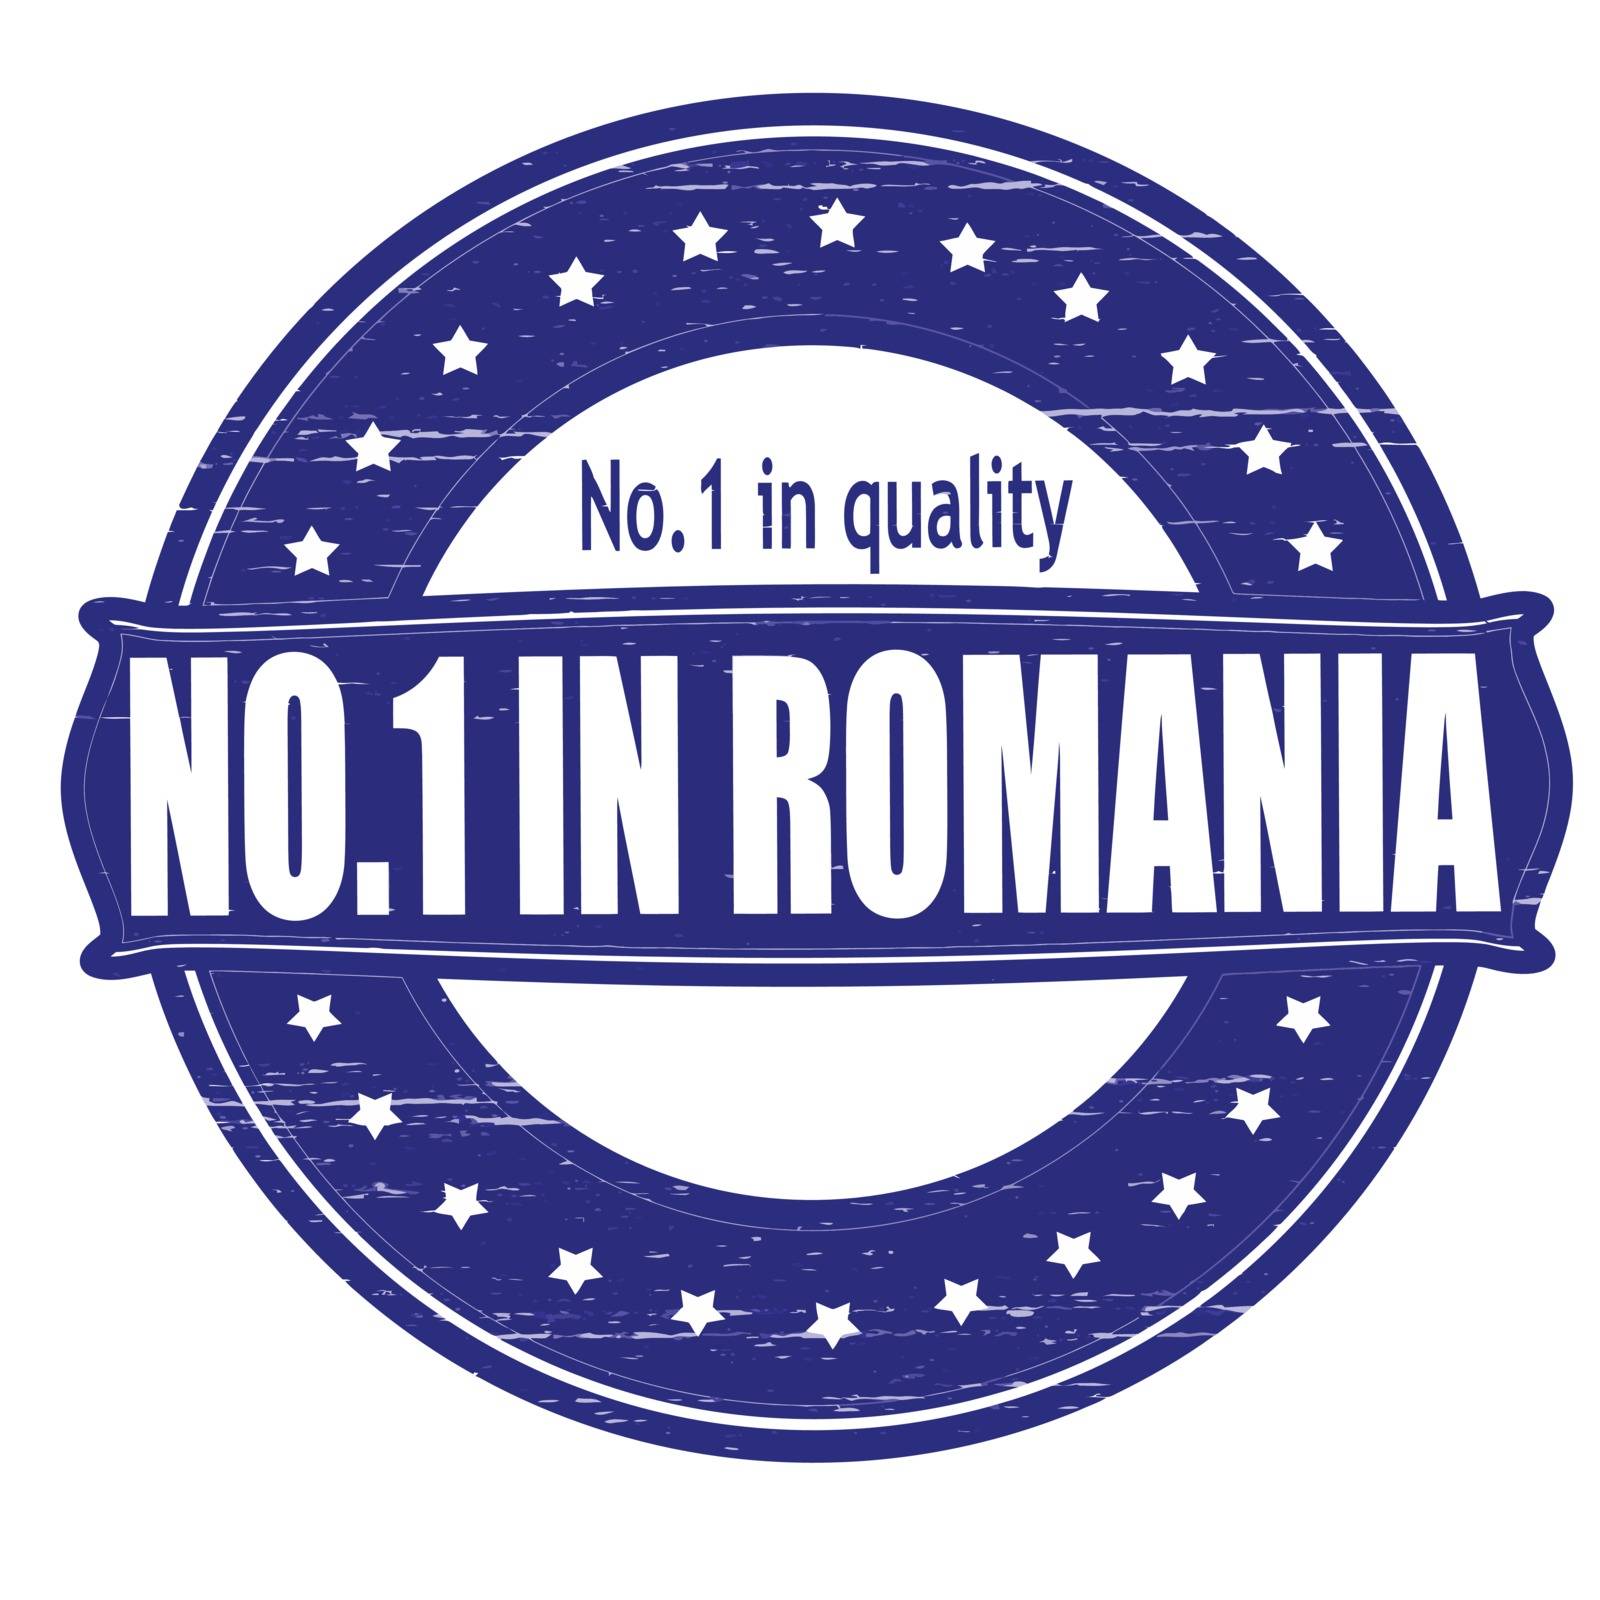 No one in Romania by carmenbobo